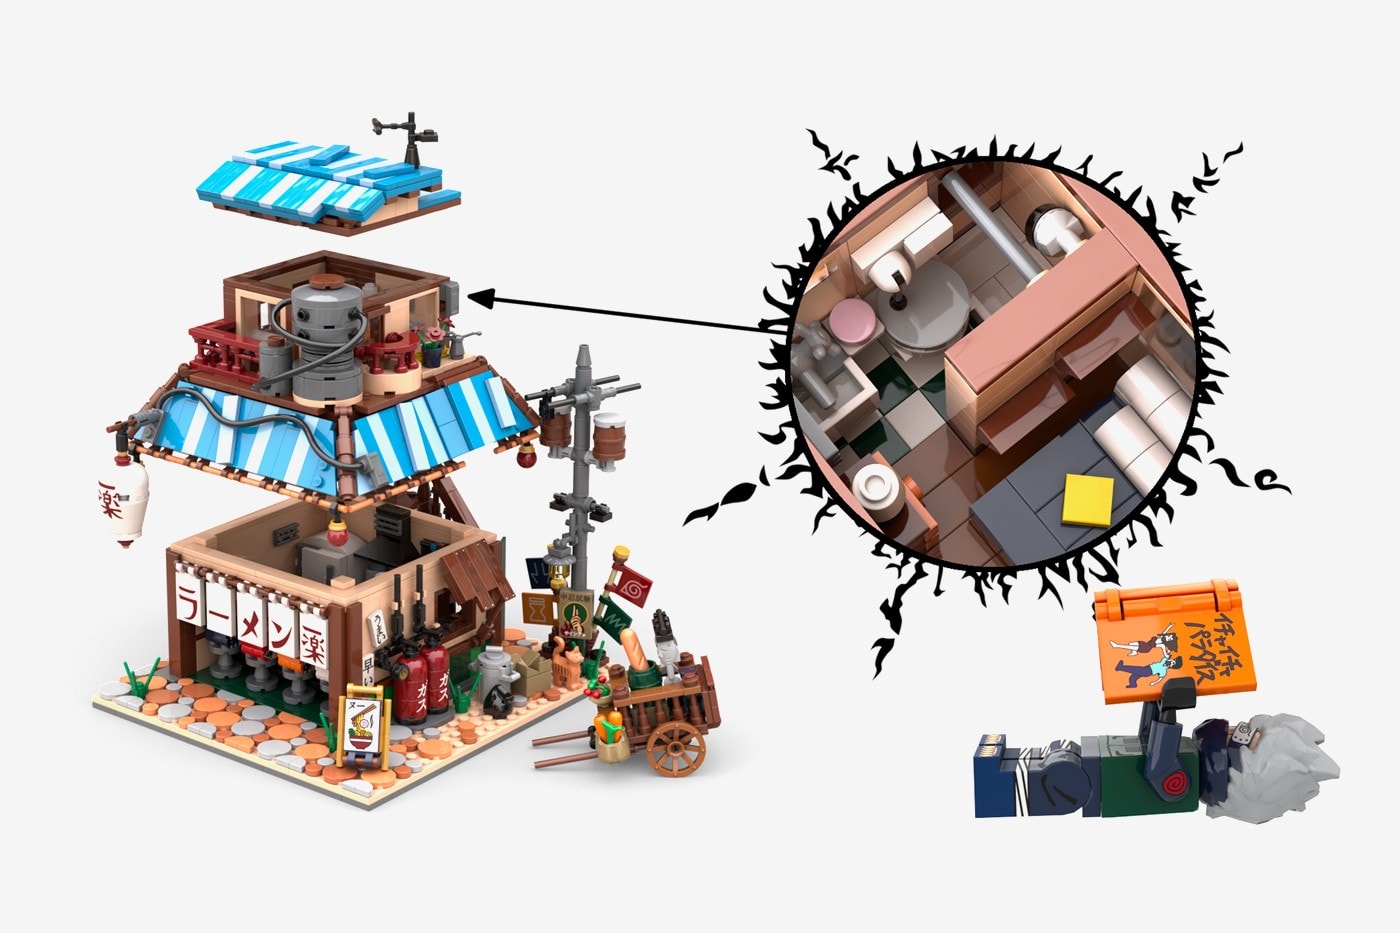 LEGO IDEAS 實體化《Naruto》經典場景「一楽拉麵」